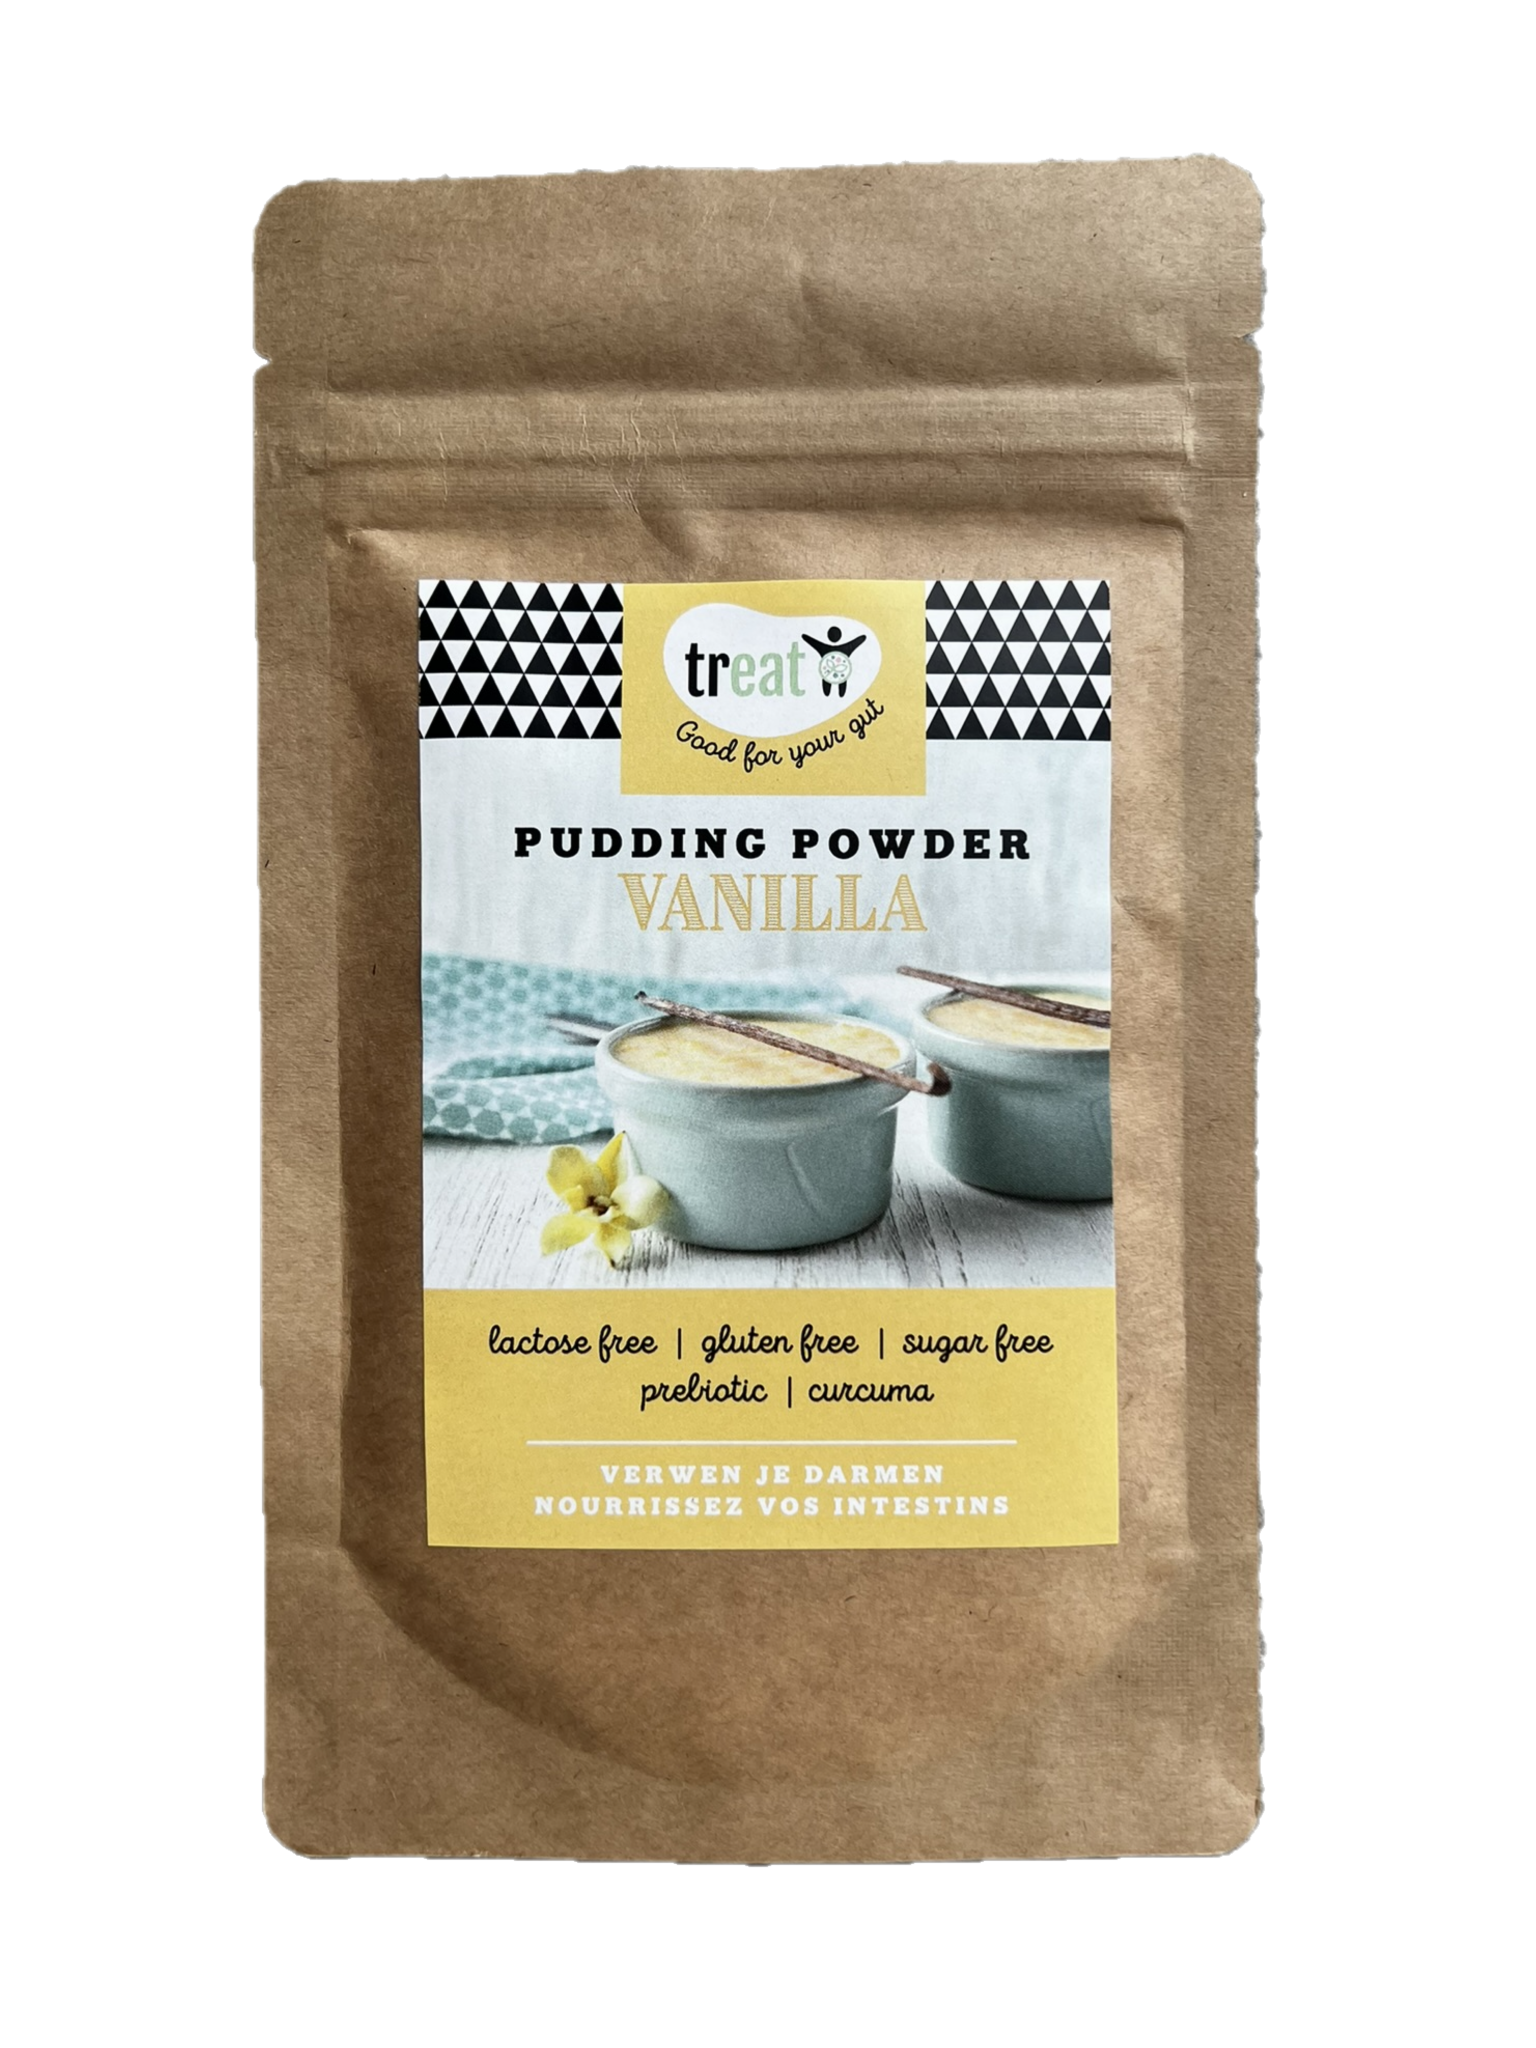 A pack of TREAT Pudding Powder Vanilla